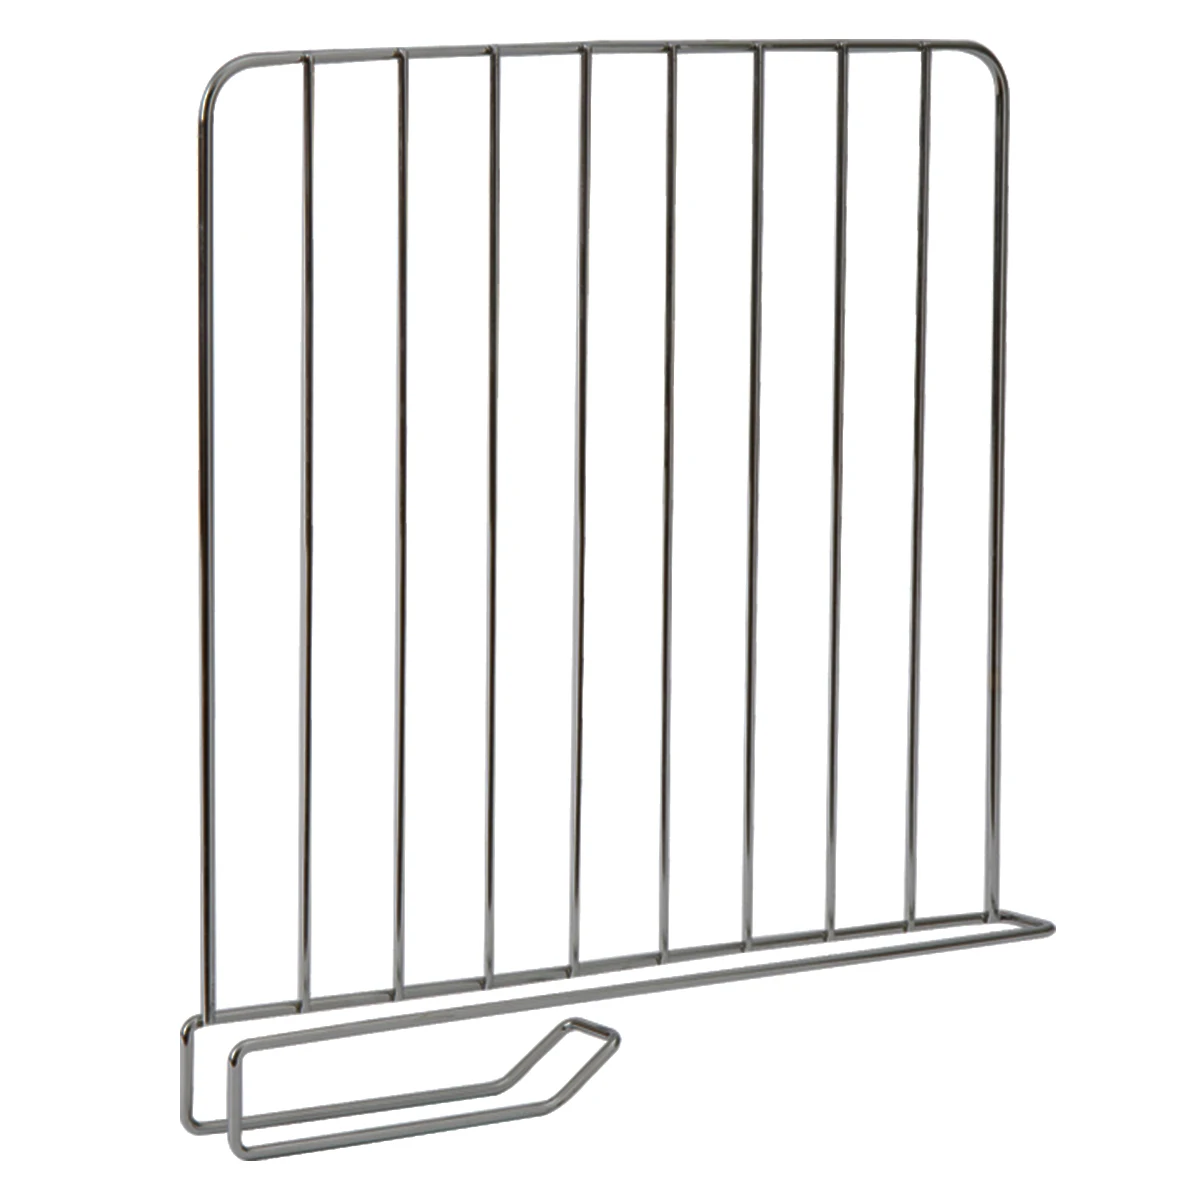 

ORZ New & Improved housekeeping closet organizer Storage Separator Steel Wire Shelf Divider Wardrobe dividers, Silver